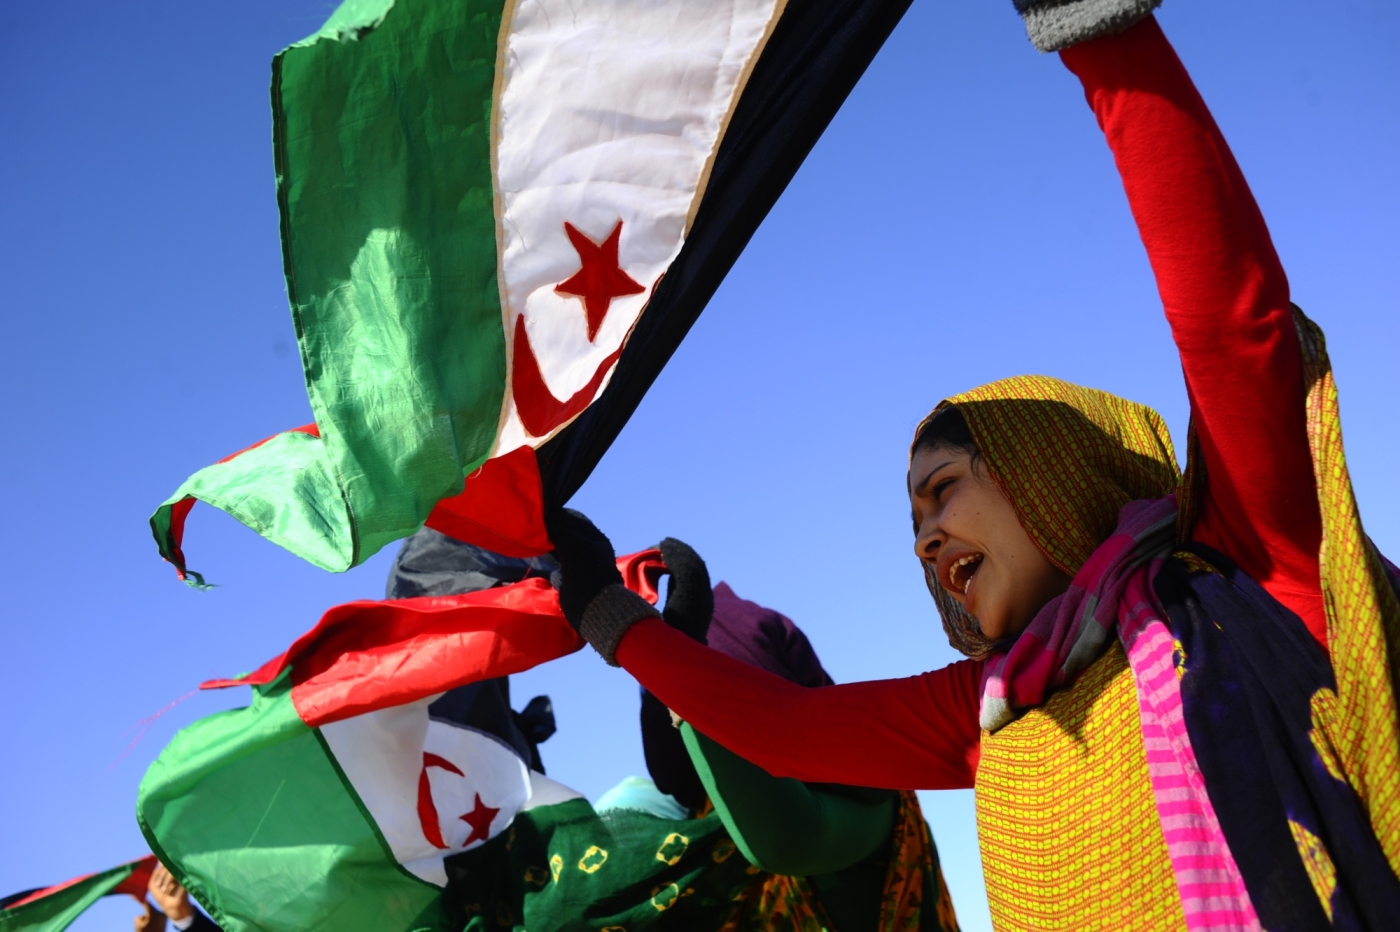 A Sahrawi woman protests in Western Sahara in 2014 (MEE/Oscar Rickett)